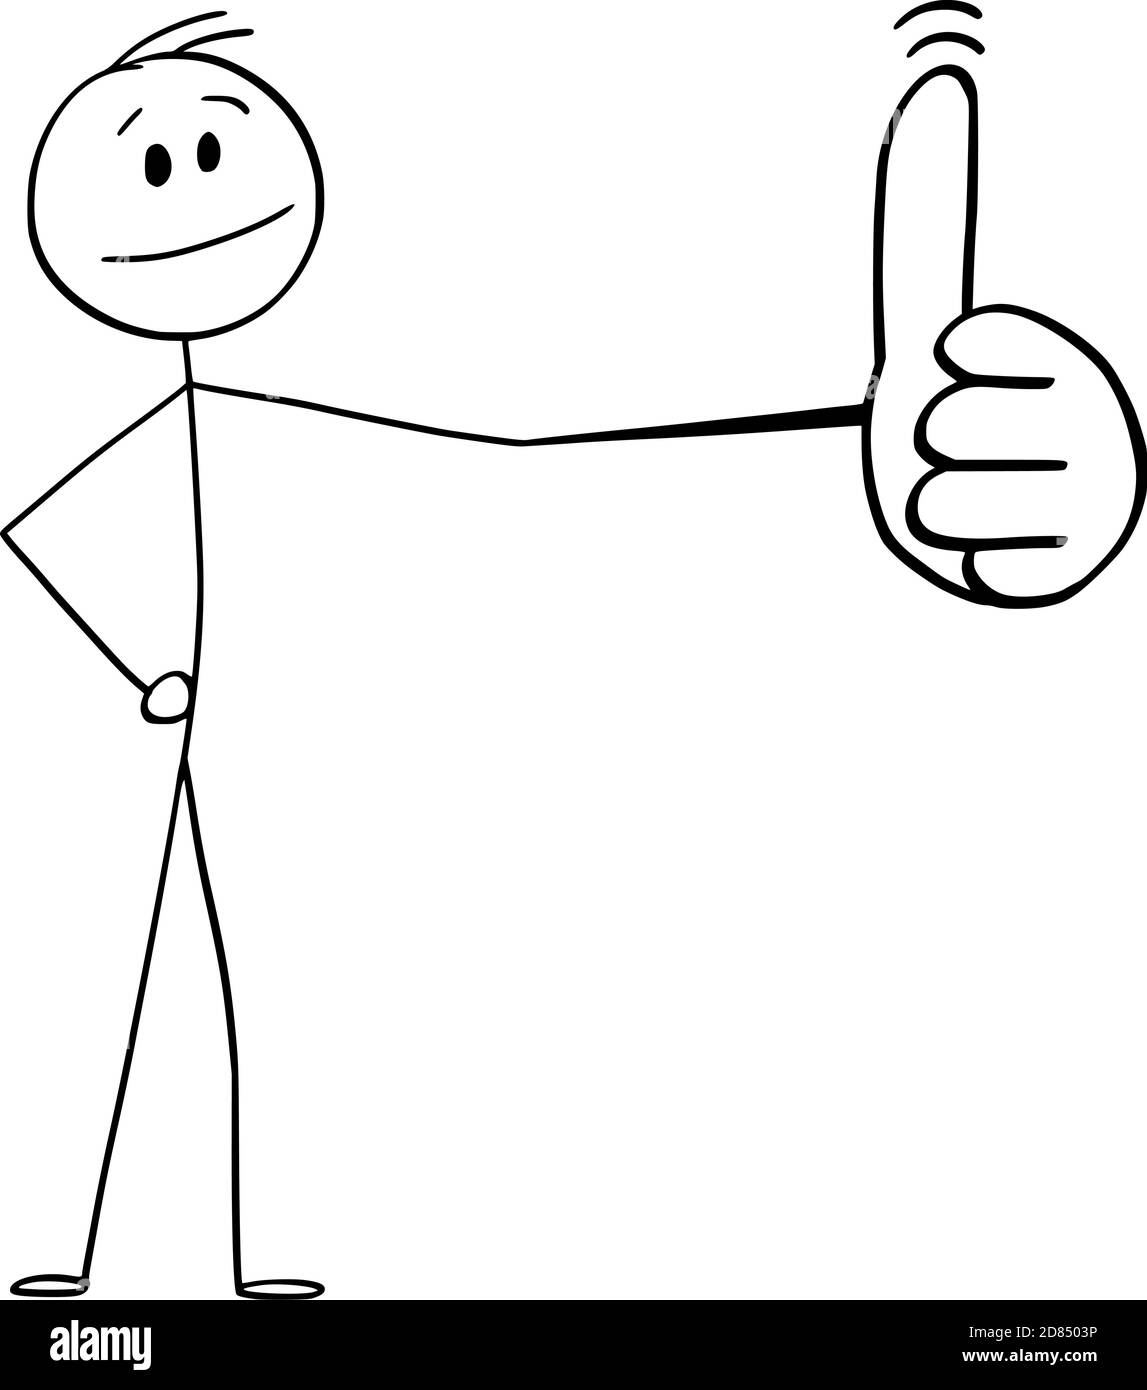 https://c8.alamy.com/comp/2D8503P/vector-cartoon-stick-figure-illustration-of-man-or-businessman-showing-big-thumb-up-gesture-symbol-of-success-or-positivity-2D8503P.jpg